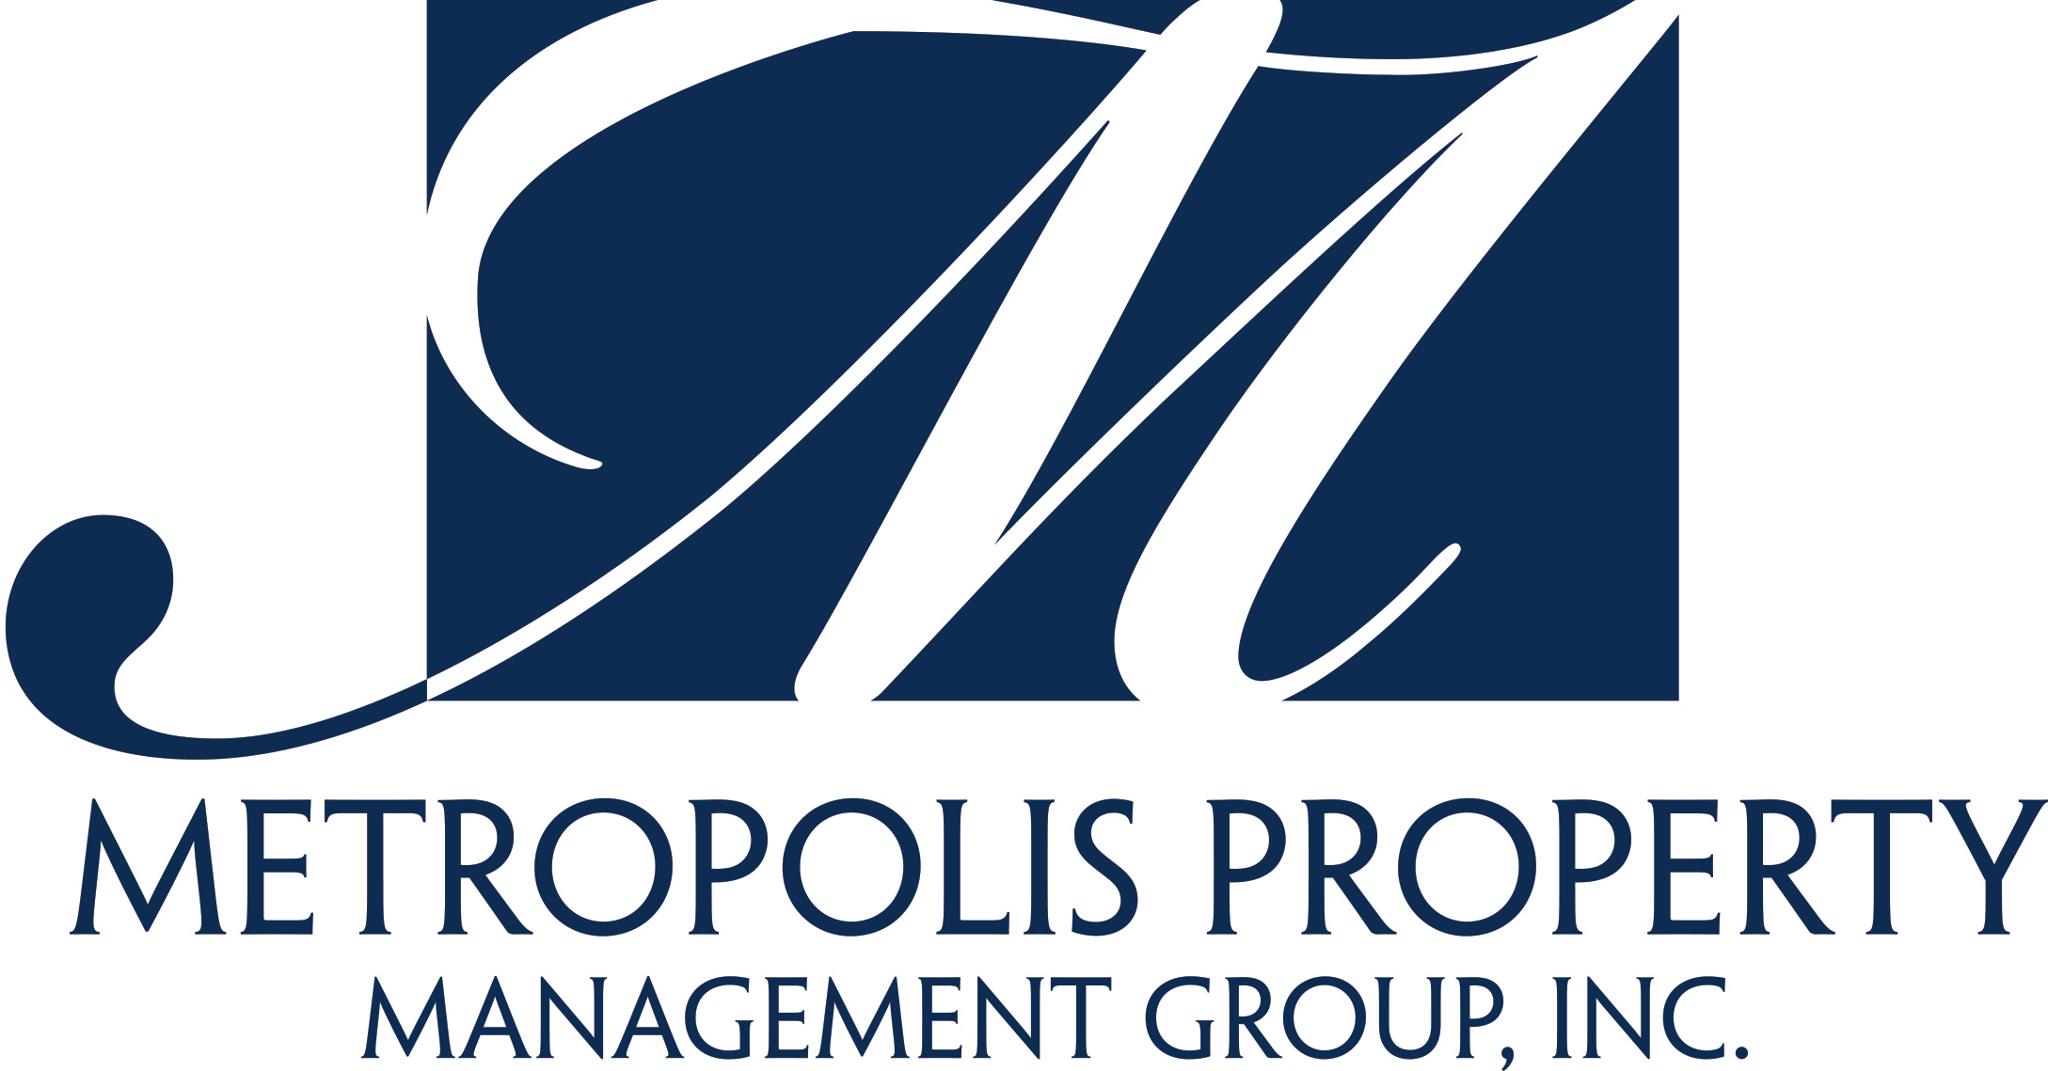 Metropolis Property Management